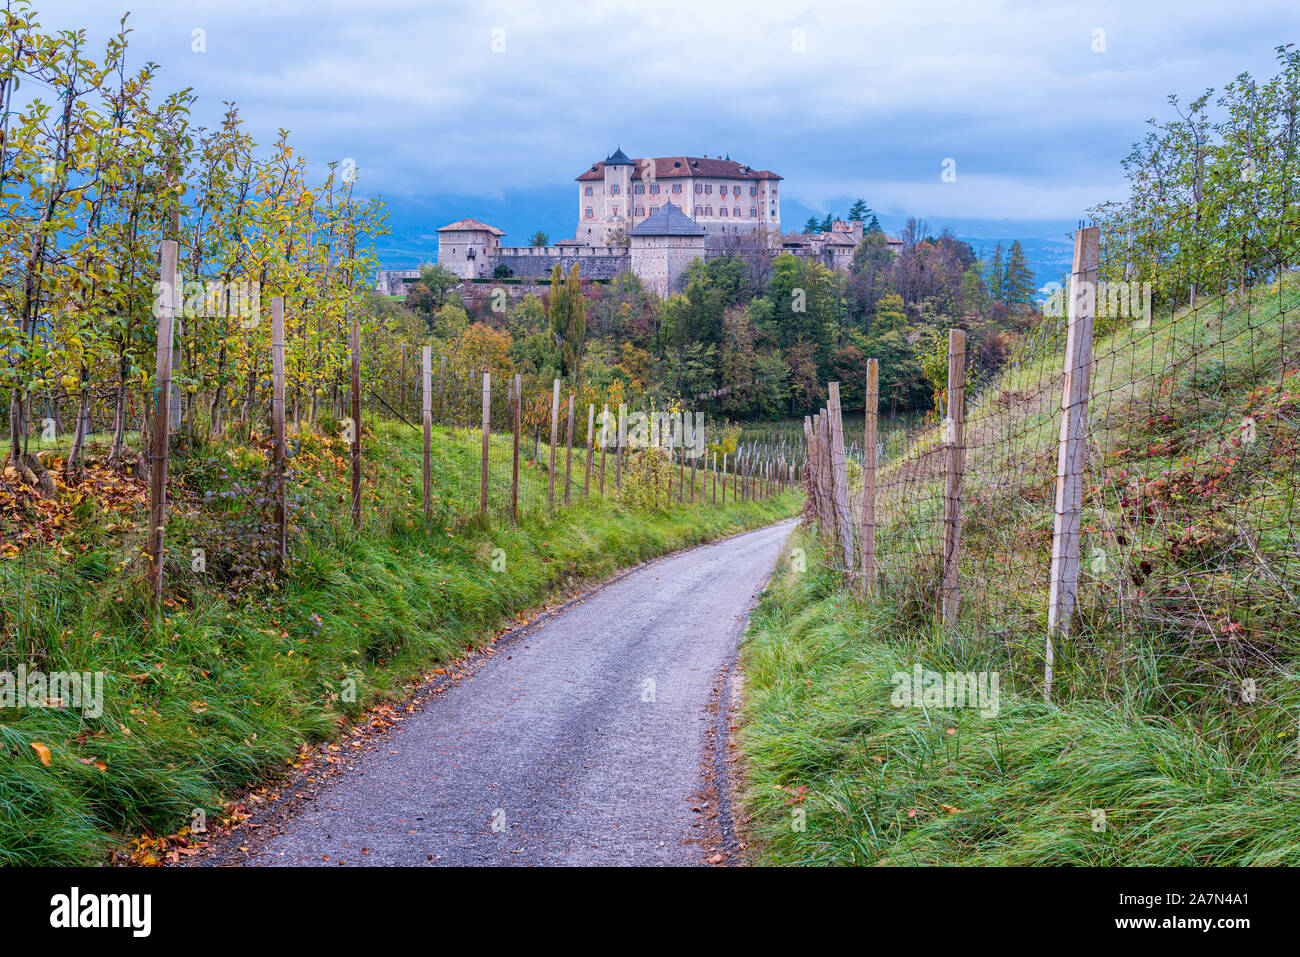 Malerische Aussicht auf Schloss Thun, Val di Non, Provinz Trento, Trentino-Südtirol, Italien. Stockfoto